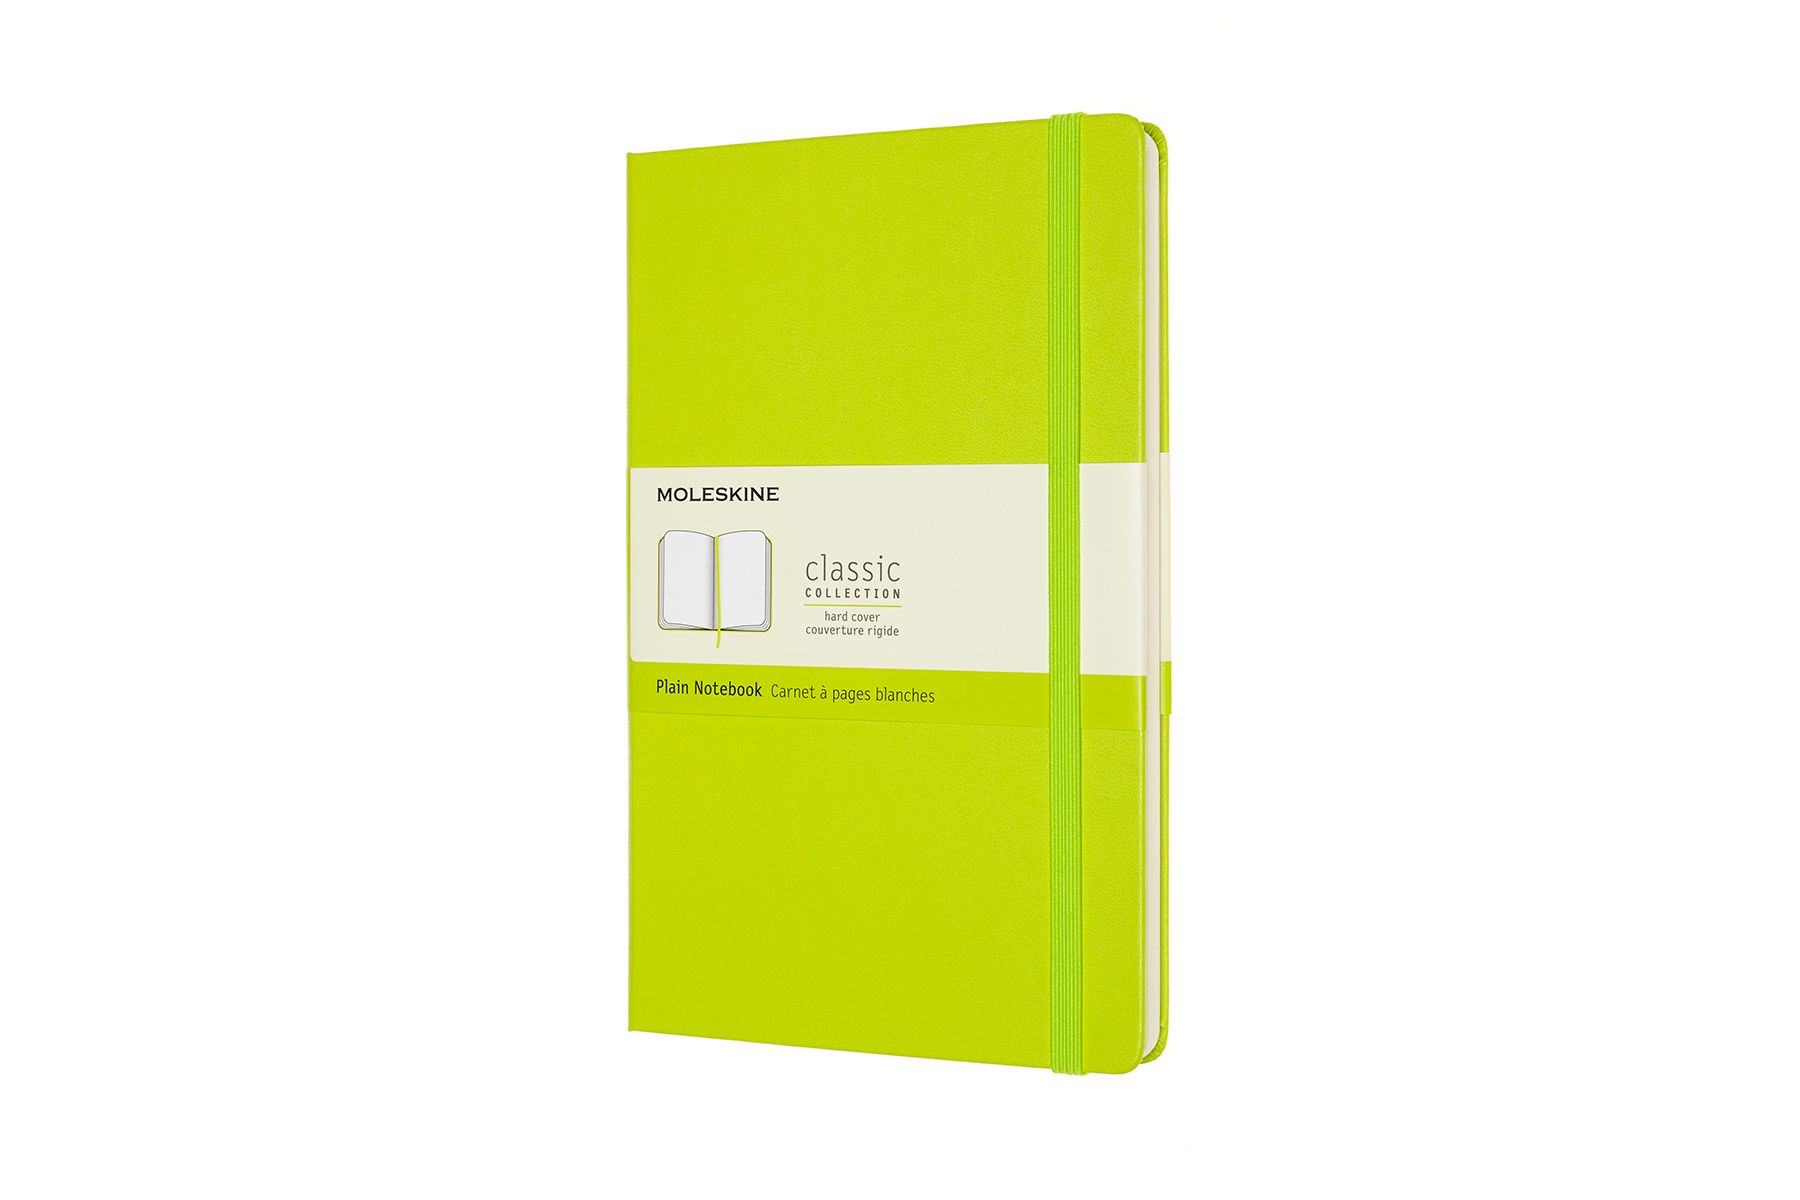 Want buy Moleskine Notebook? | Moleskine.nl –